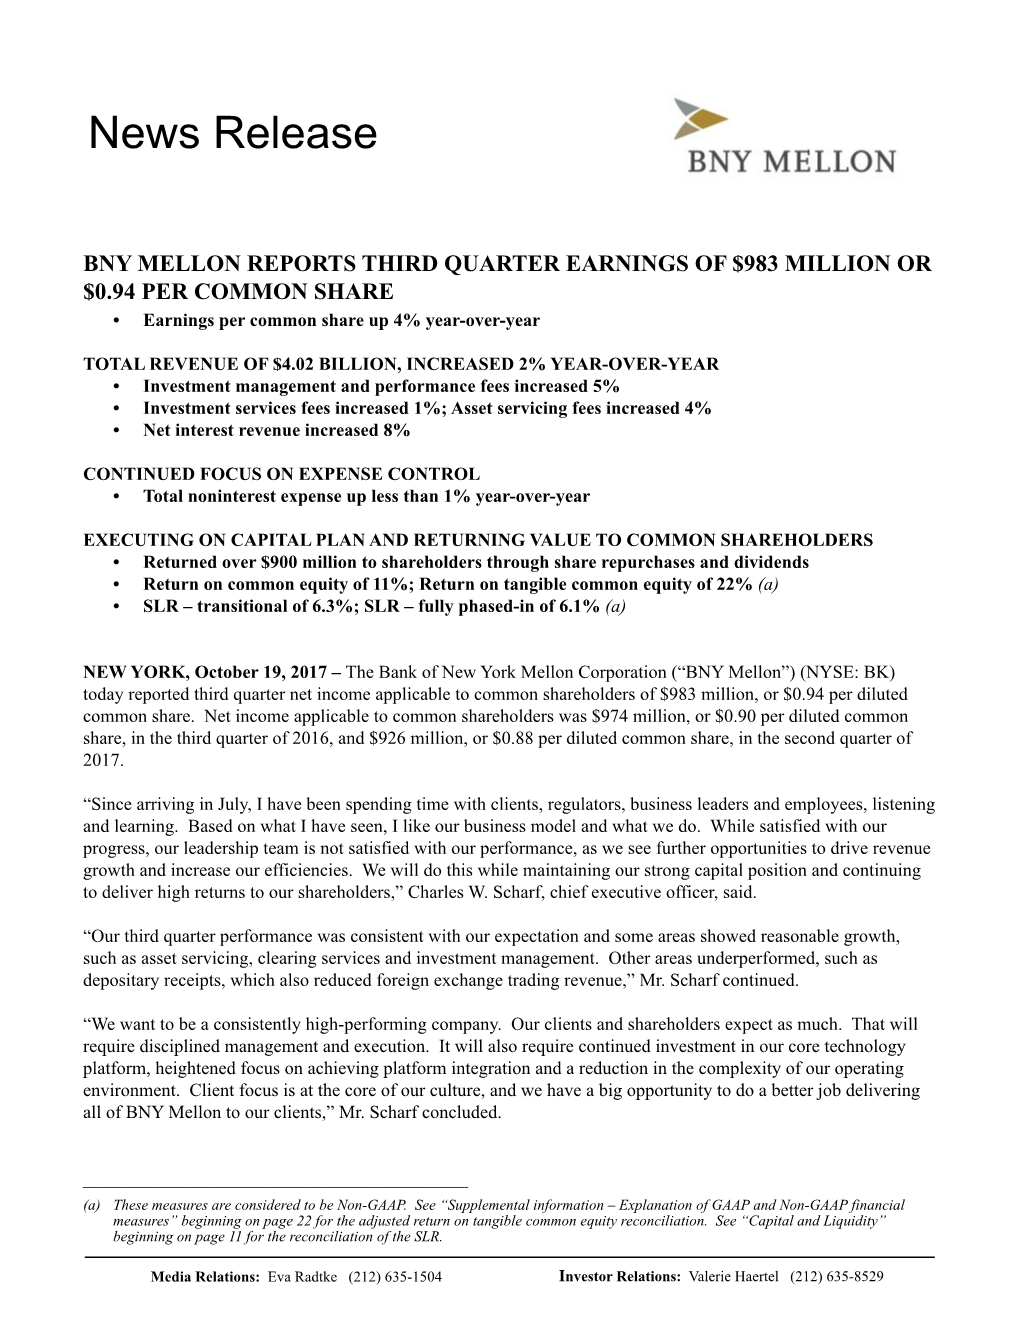 BNY Mellon Financial Results 3Q 2017 Press Release